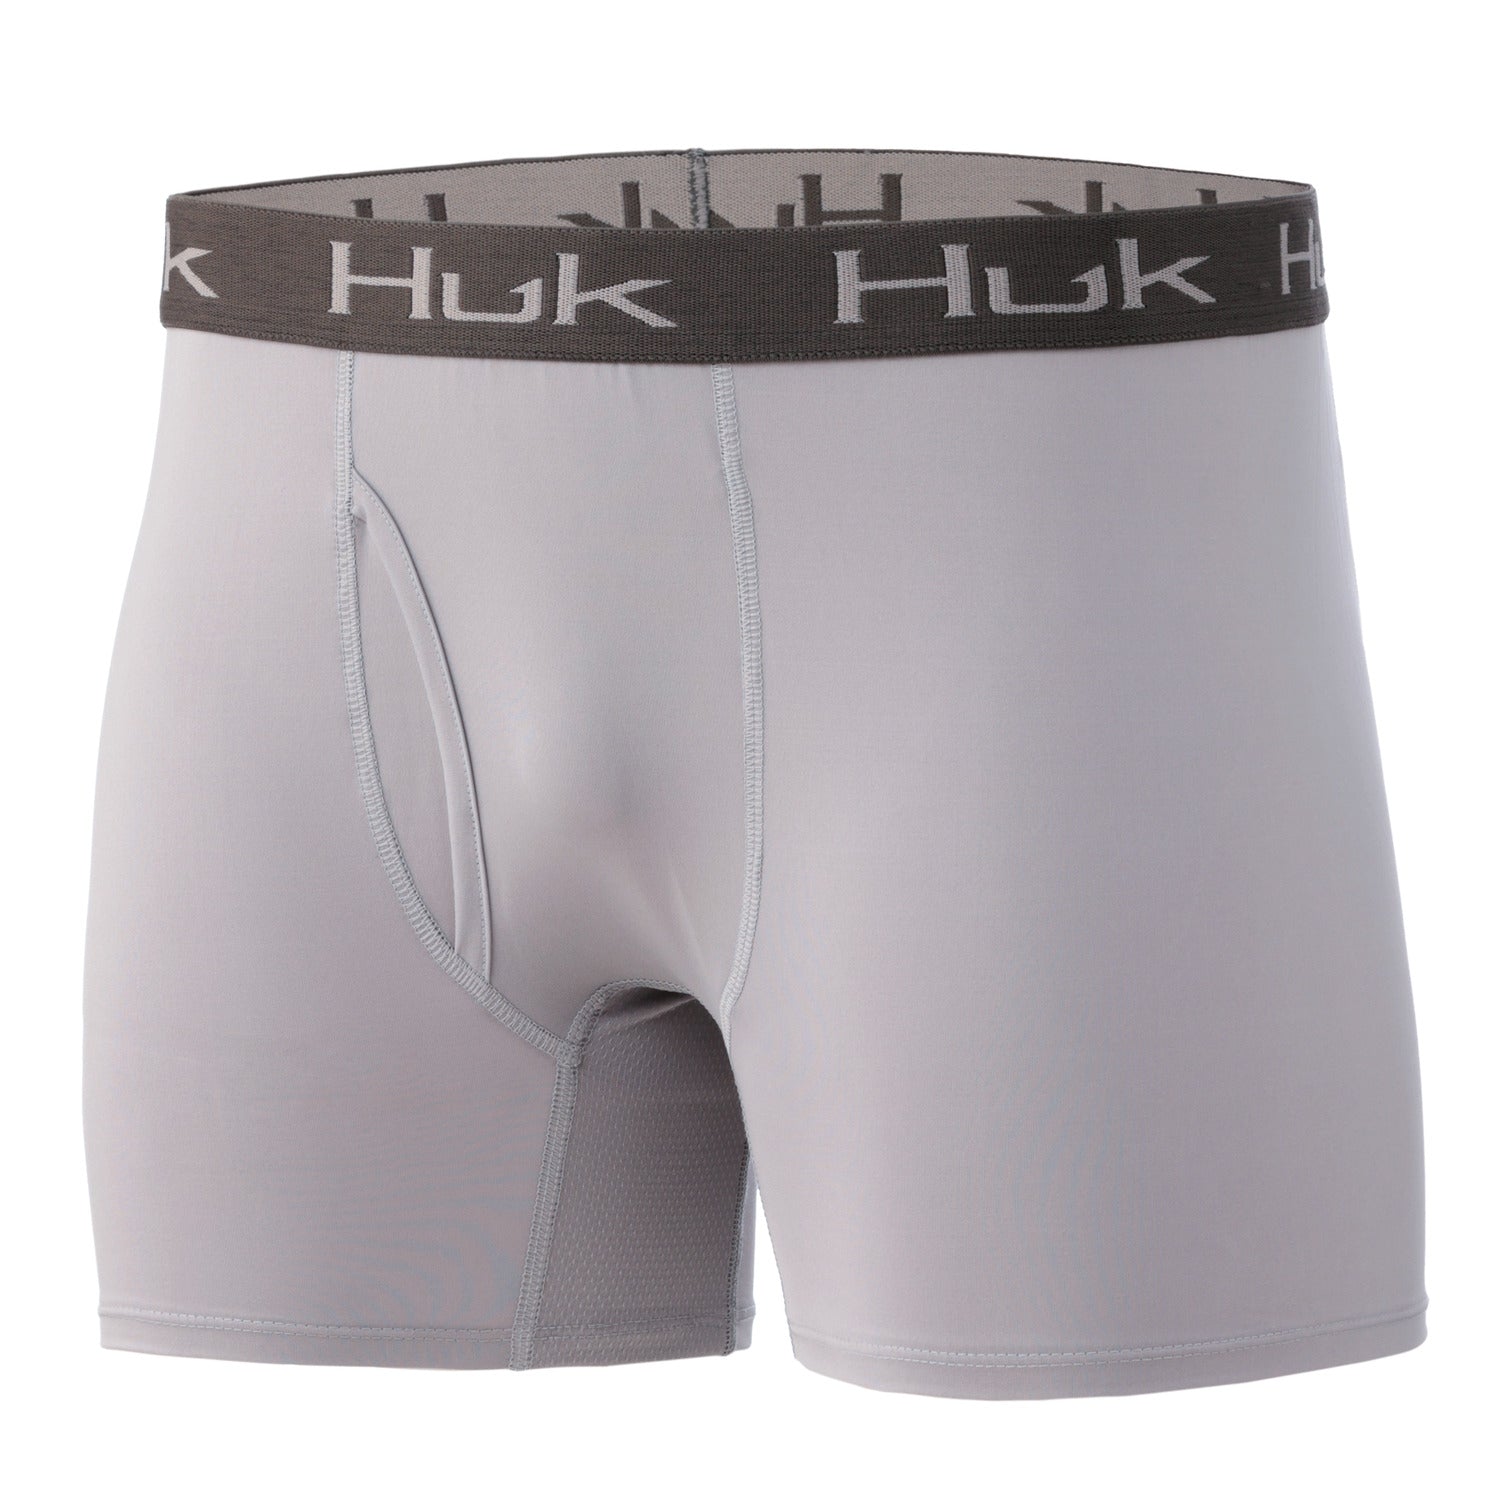 Huk Men's Solid Boxer Brief in Overcast Grey